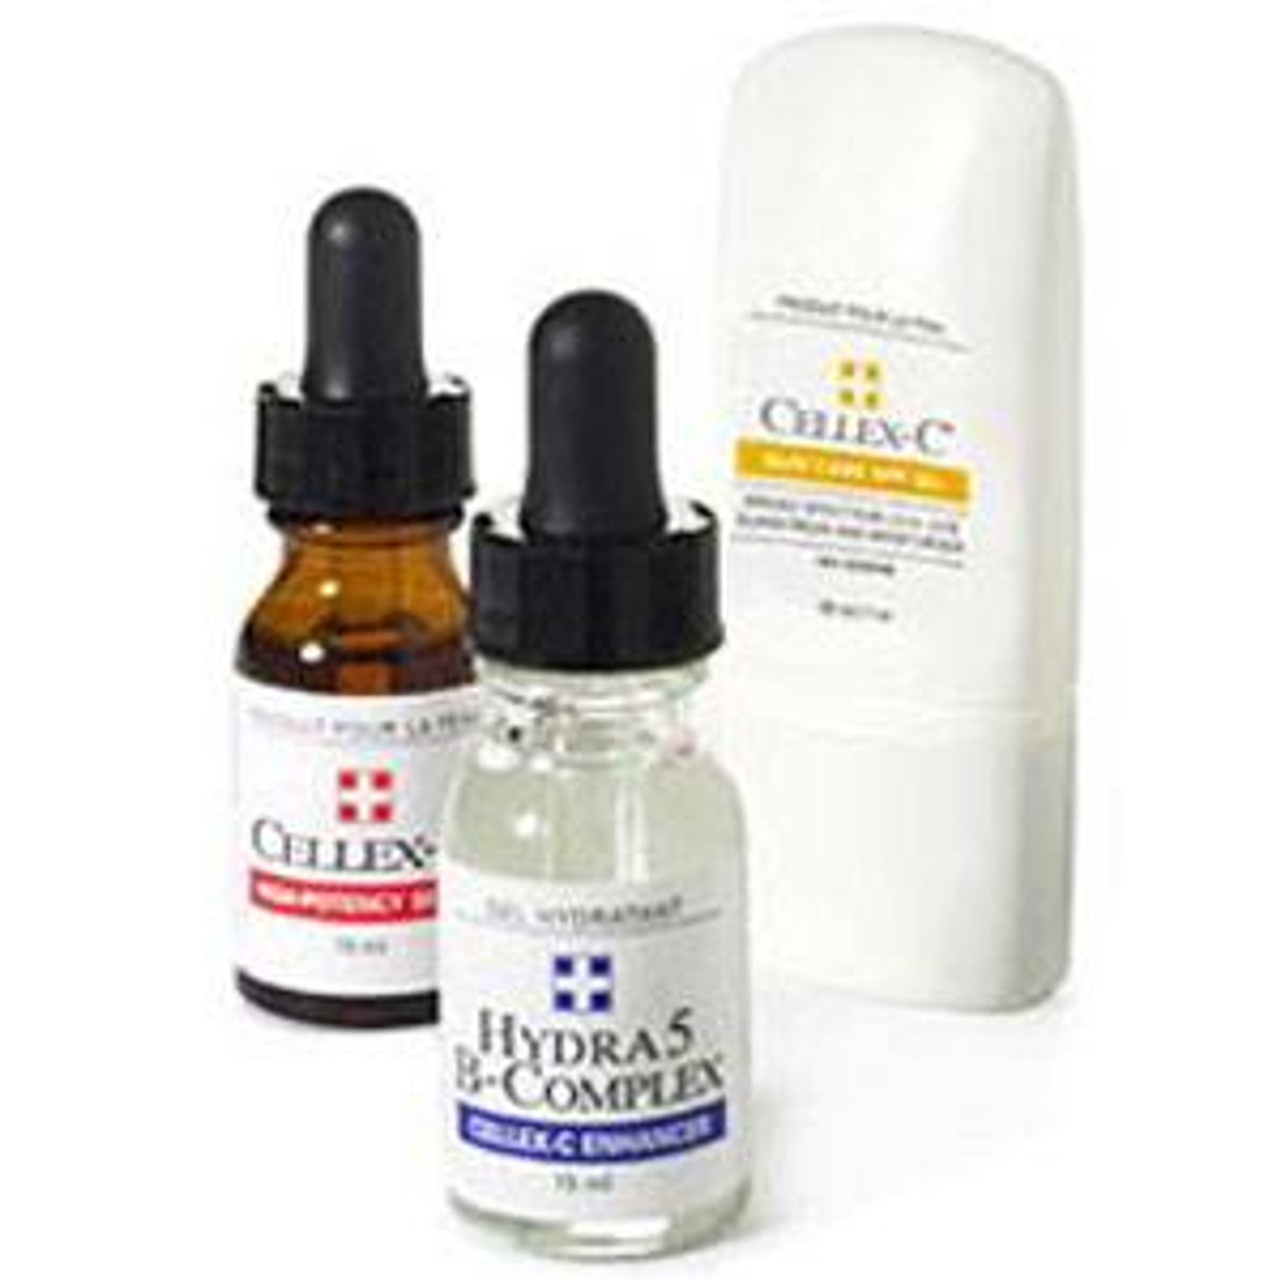 Cellex-C Anti-Aging Kit